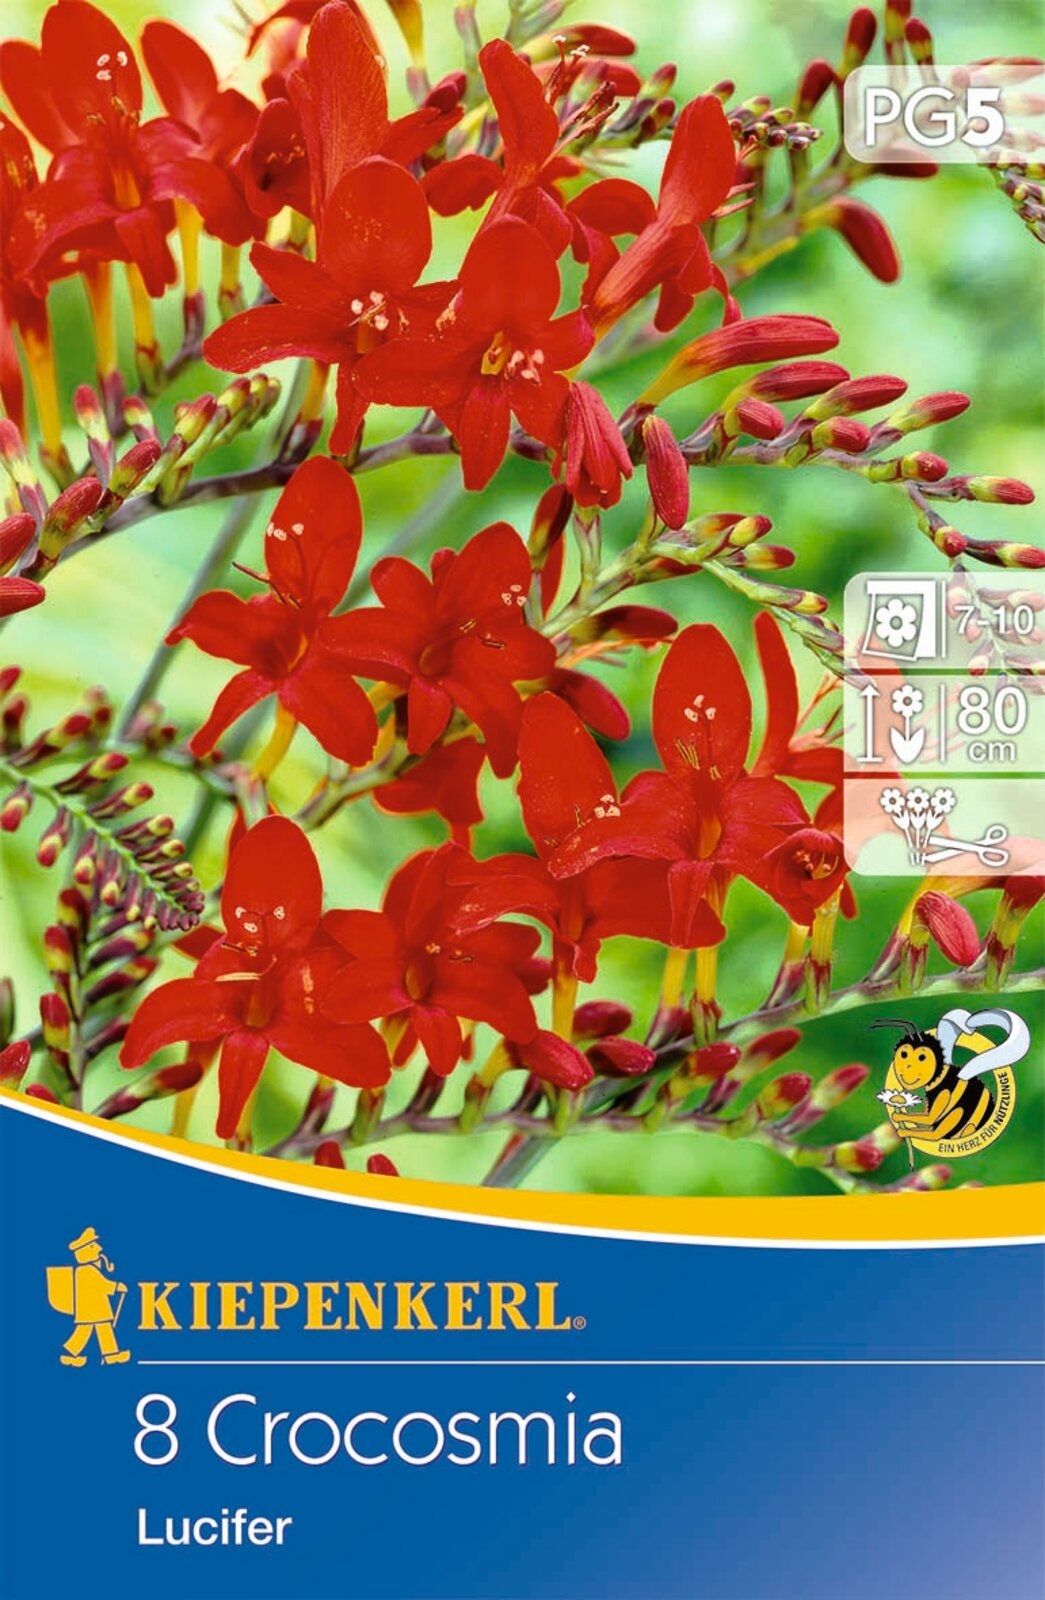 Flower bulb Willow wormwood (Crocosmia) Lucifer (red) Kiepenkerl 8 pcs